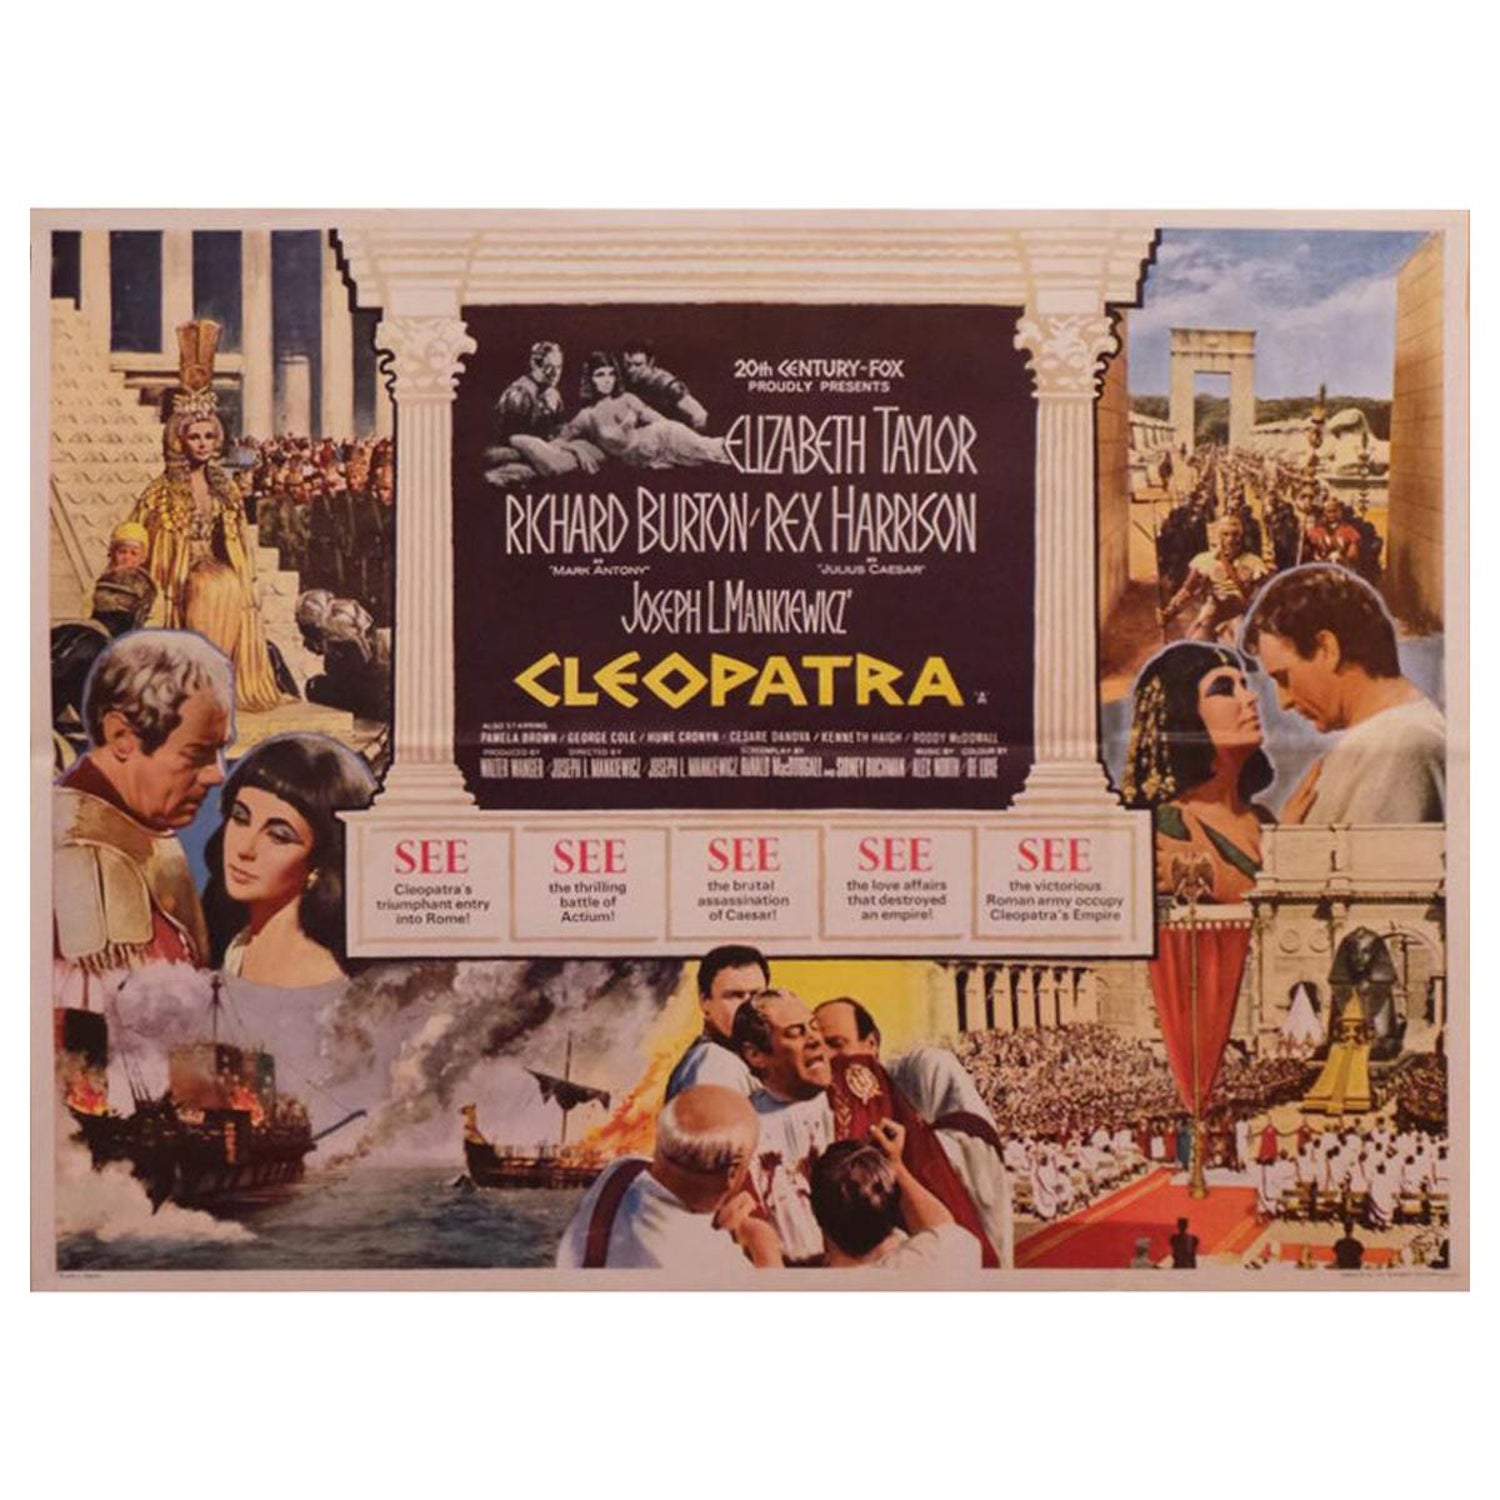 1973 CLEOPATRA JONES VINTAGE ACTION FILM MOVIE POSTER PRINT 36x24 9 MIL PAPER